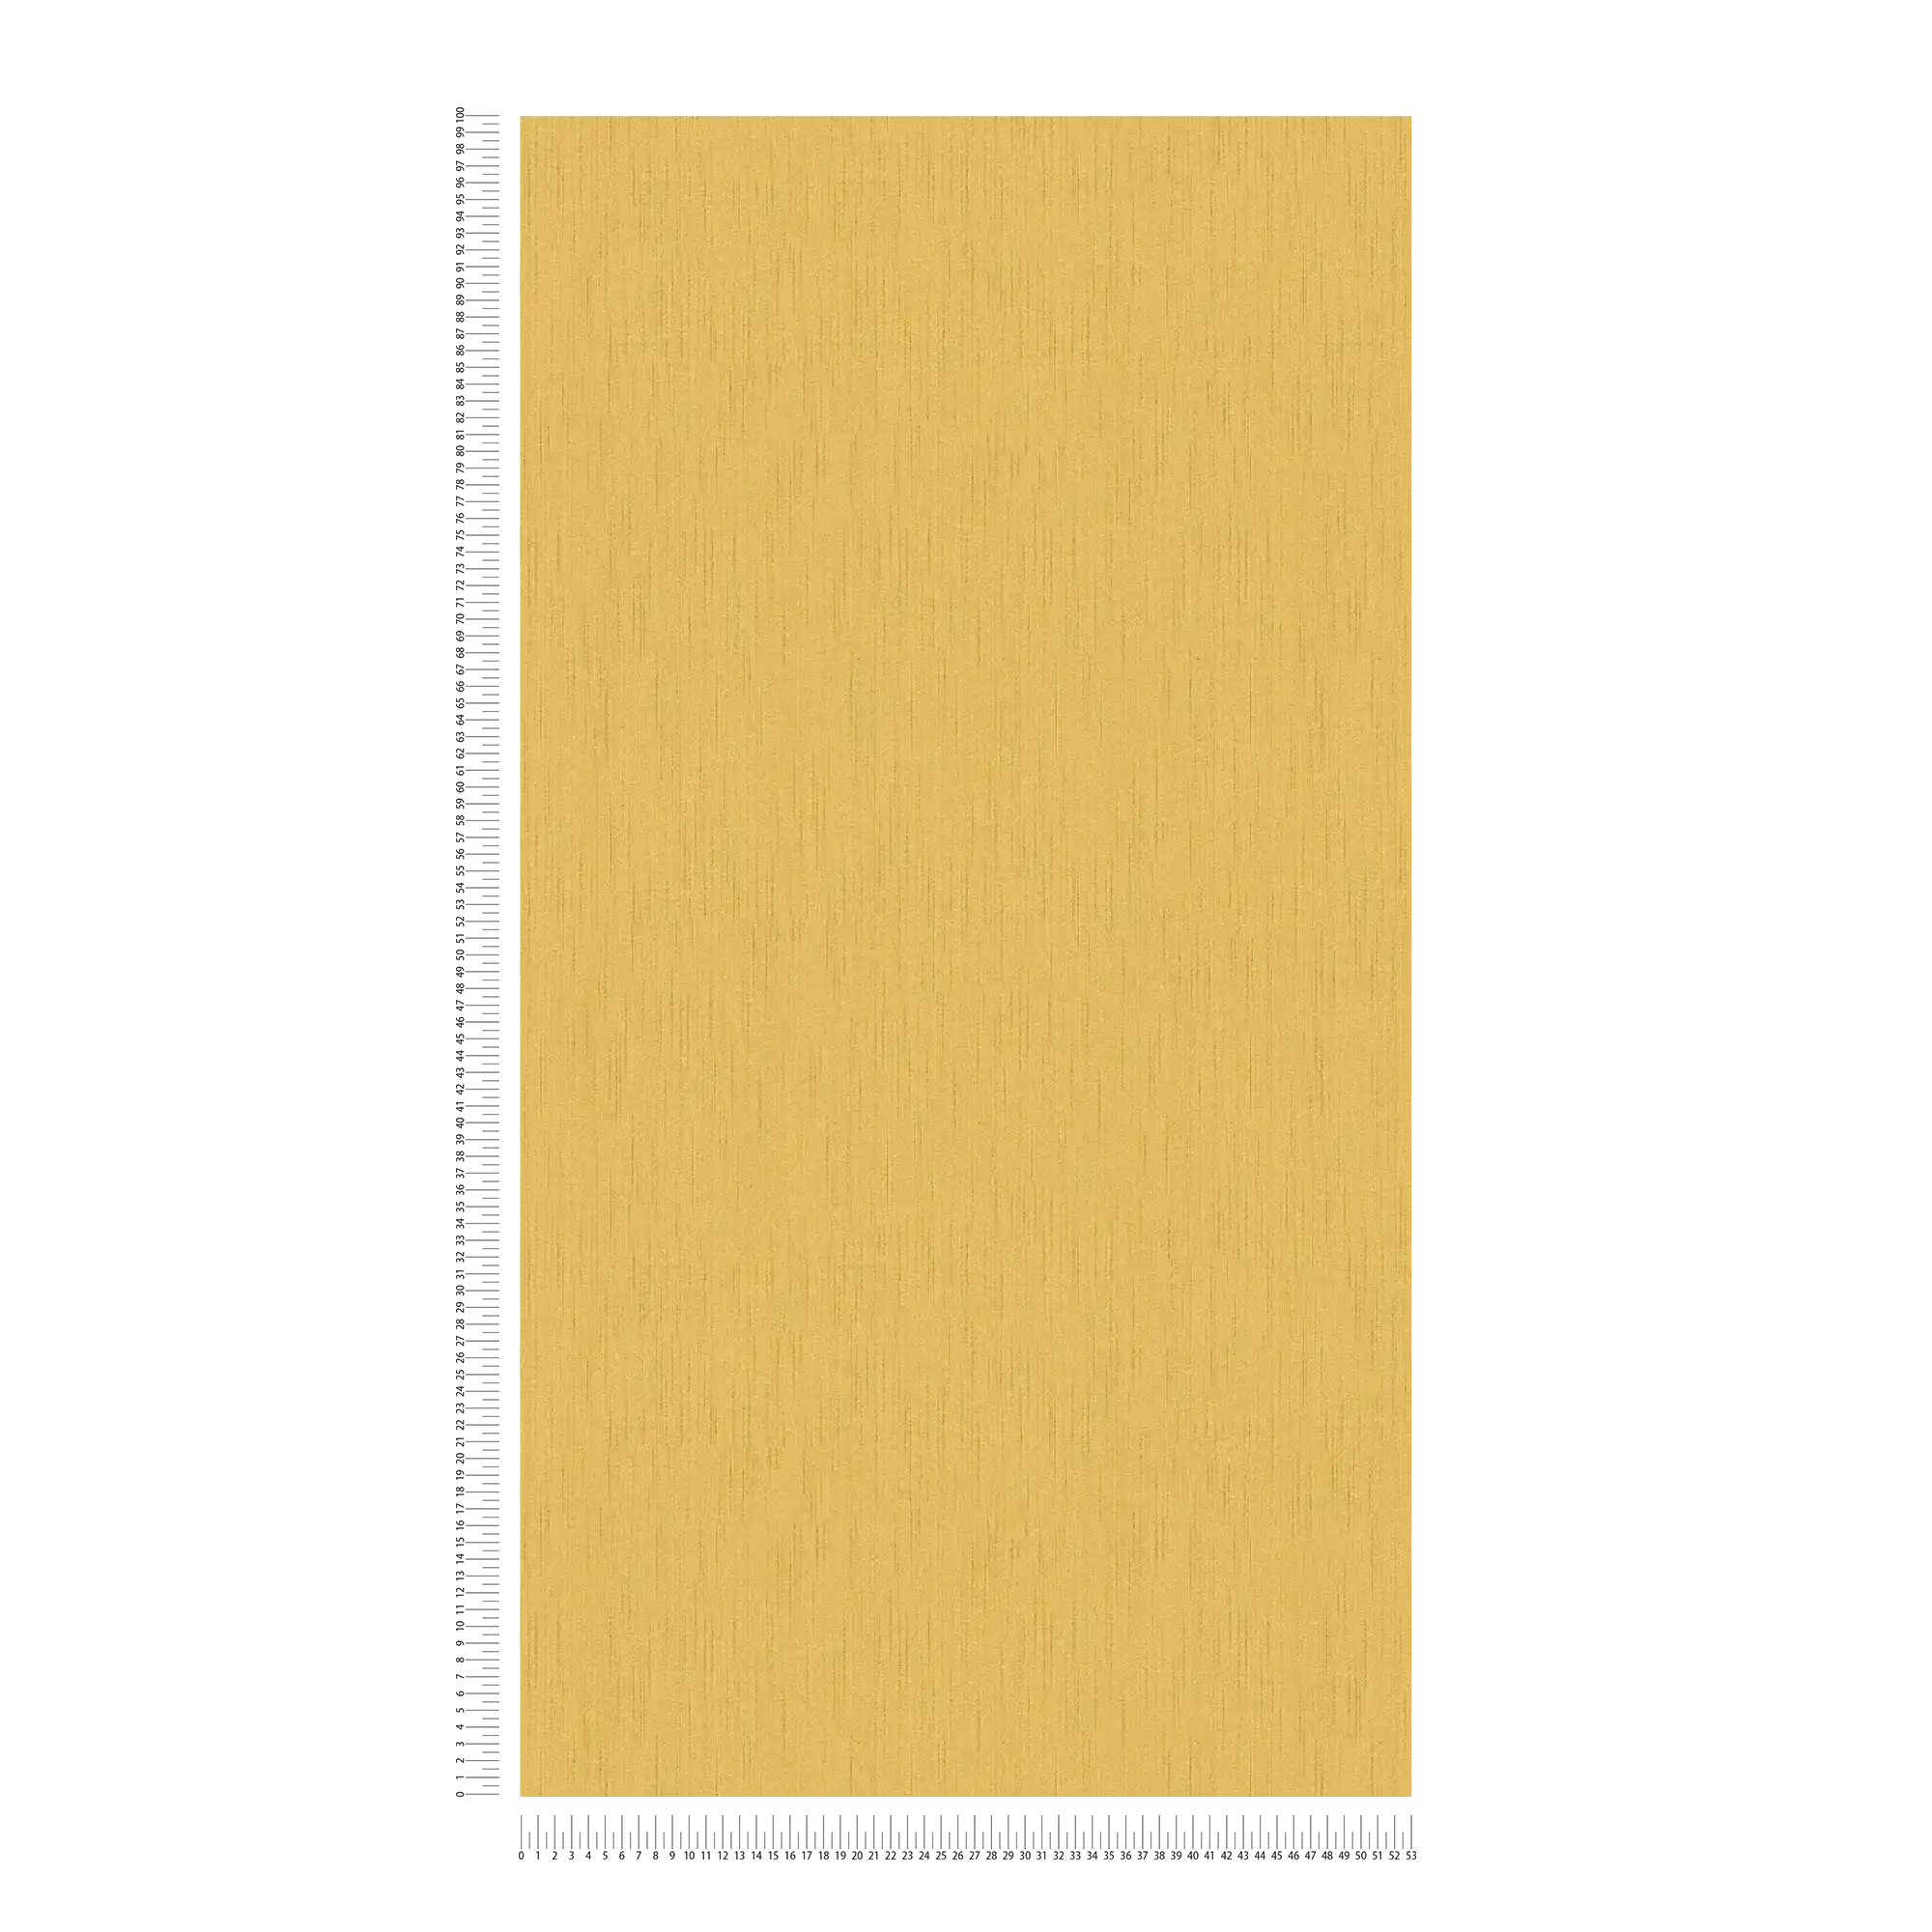             Mosterdgeel vliesbehang met gevlekt patroon - geel
        